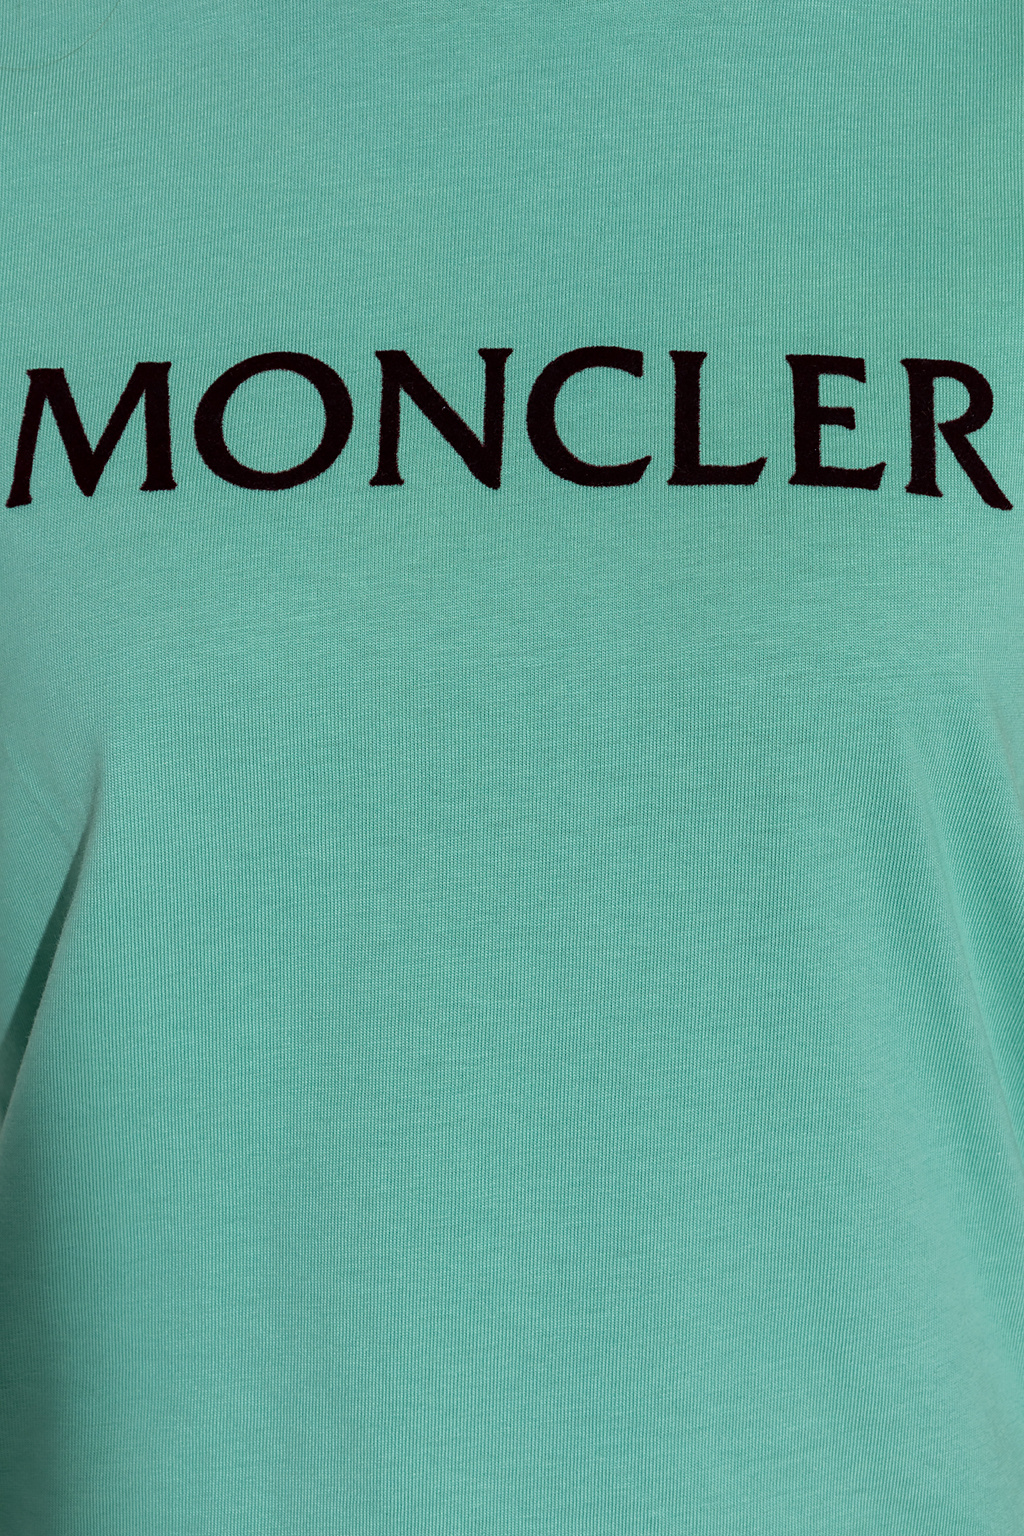 Moncler off white ow logo cotton t shirt item